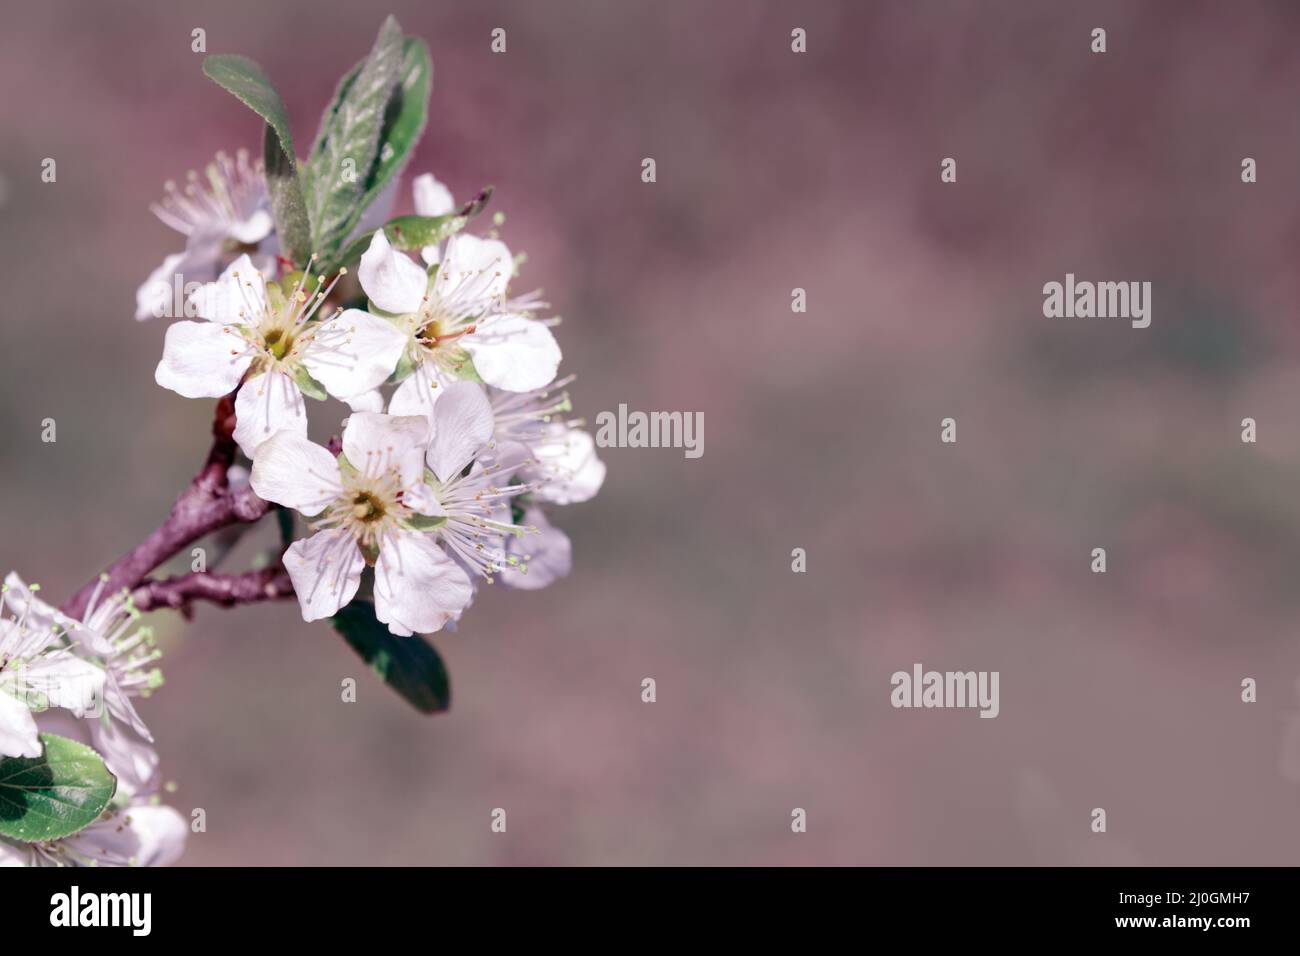 Macro shot of white cherry flowers isolated on blur background. Stock Photo